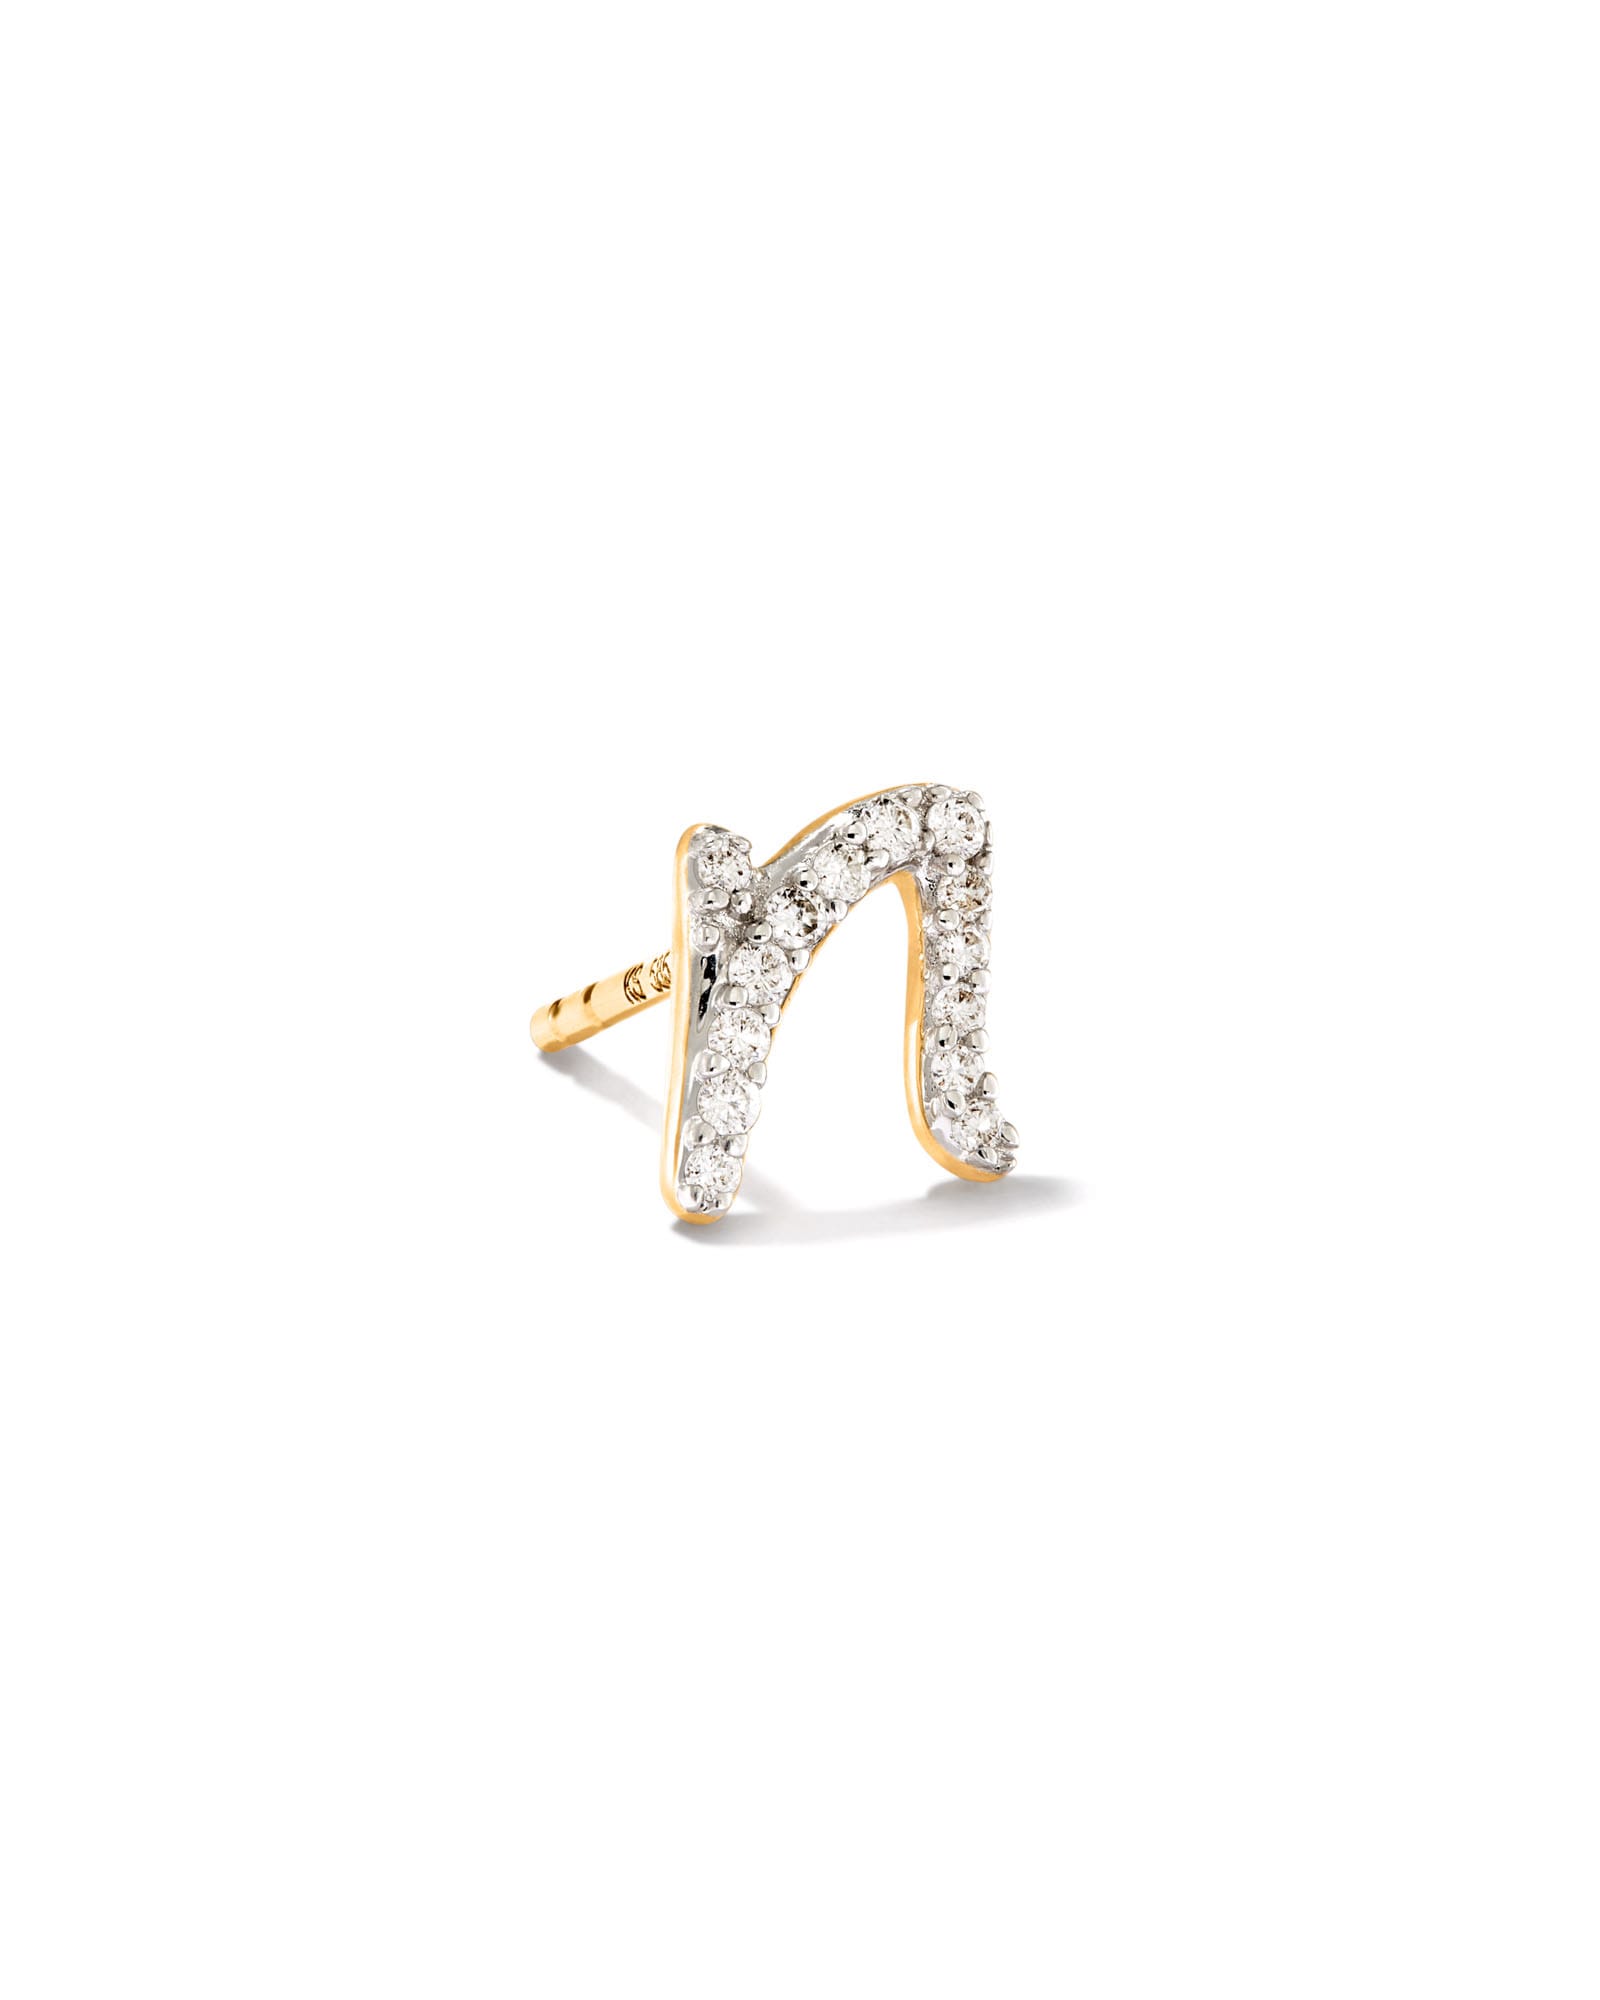 Kendra Scott Letter N 14k Yellow Gold Single Stud Earring in White Diamond | Diamonds